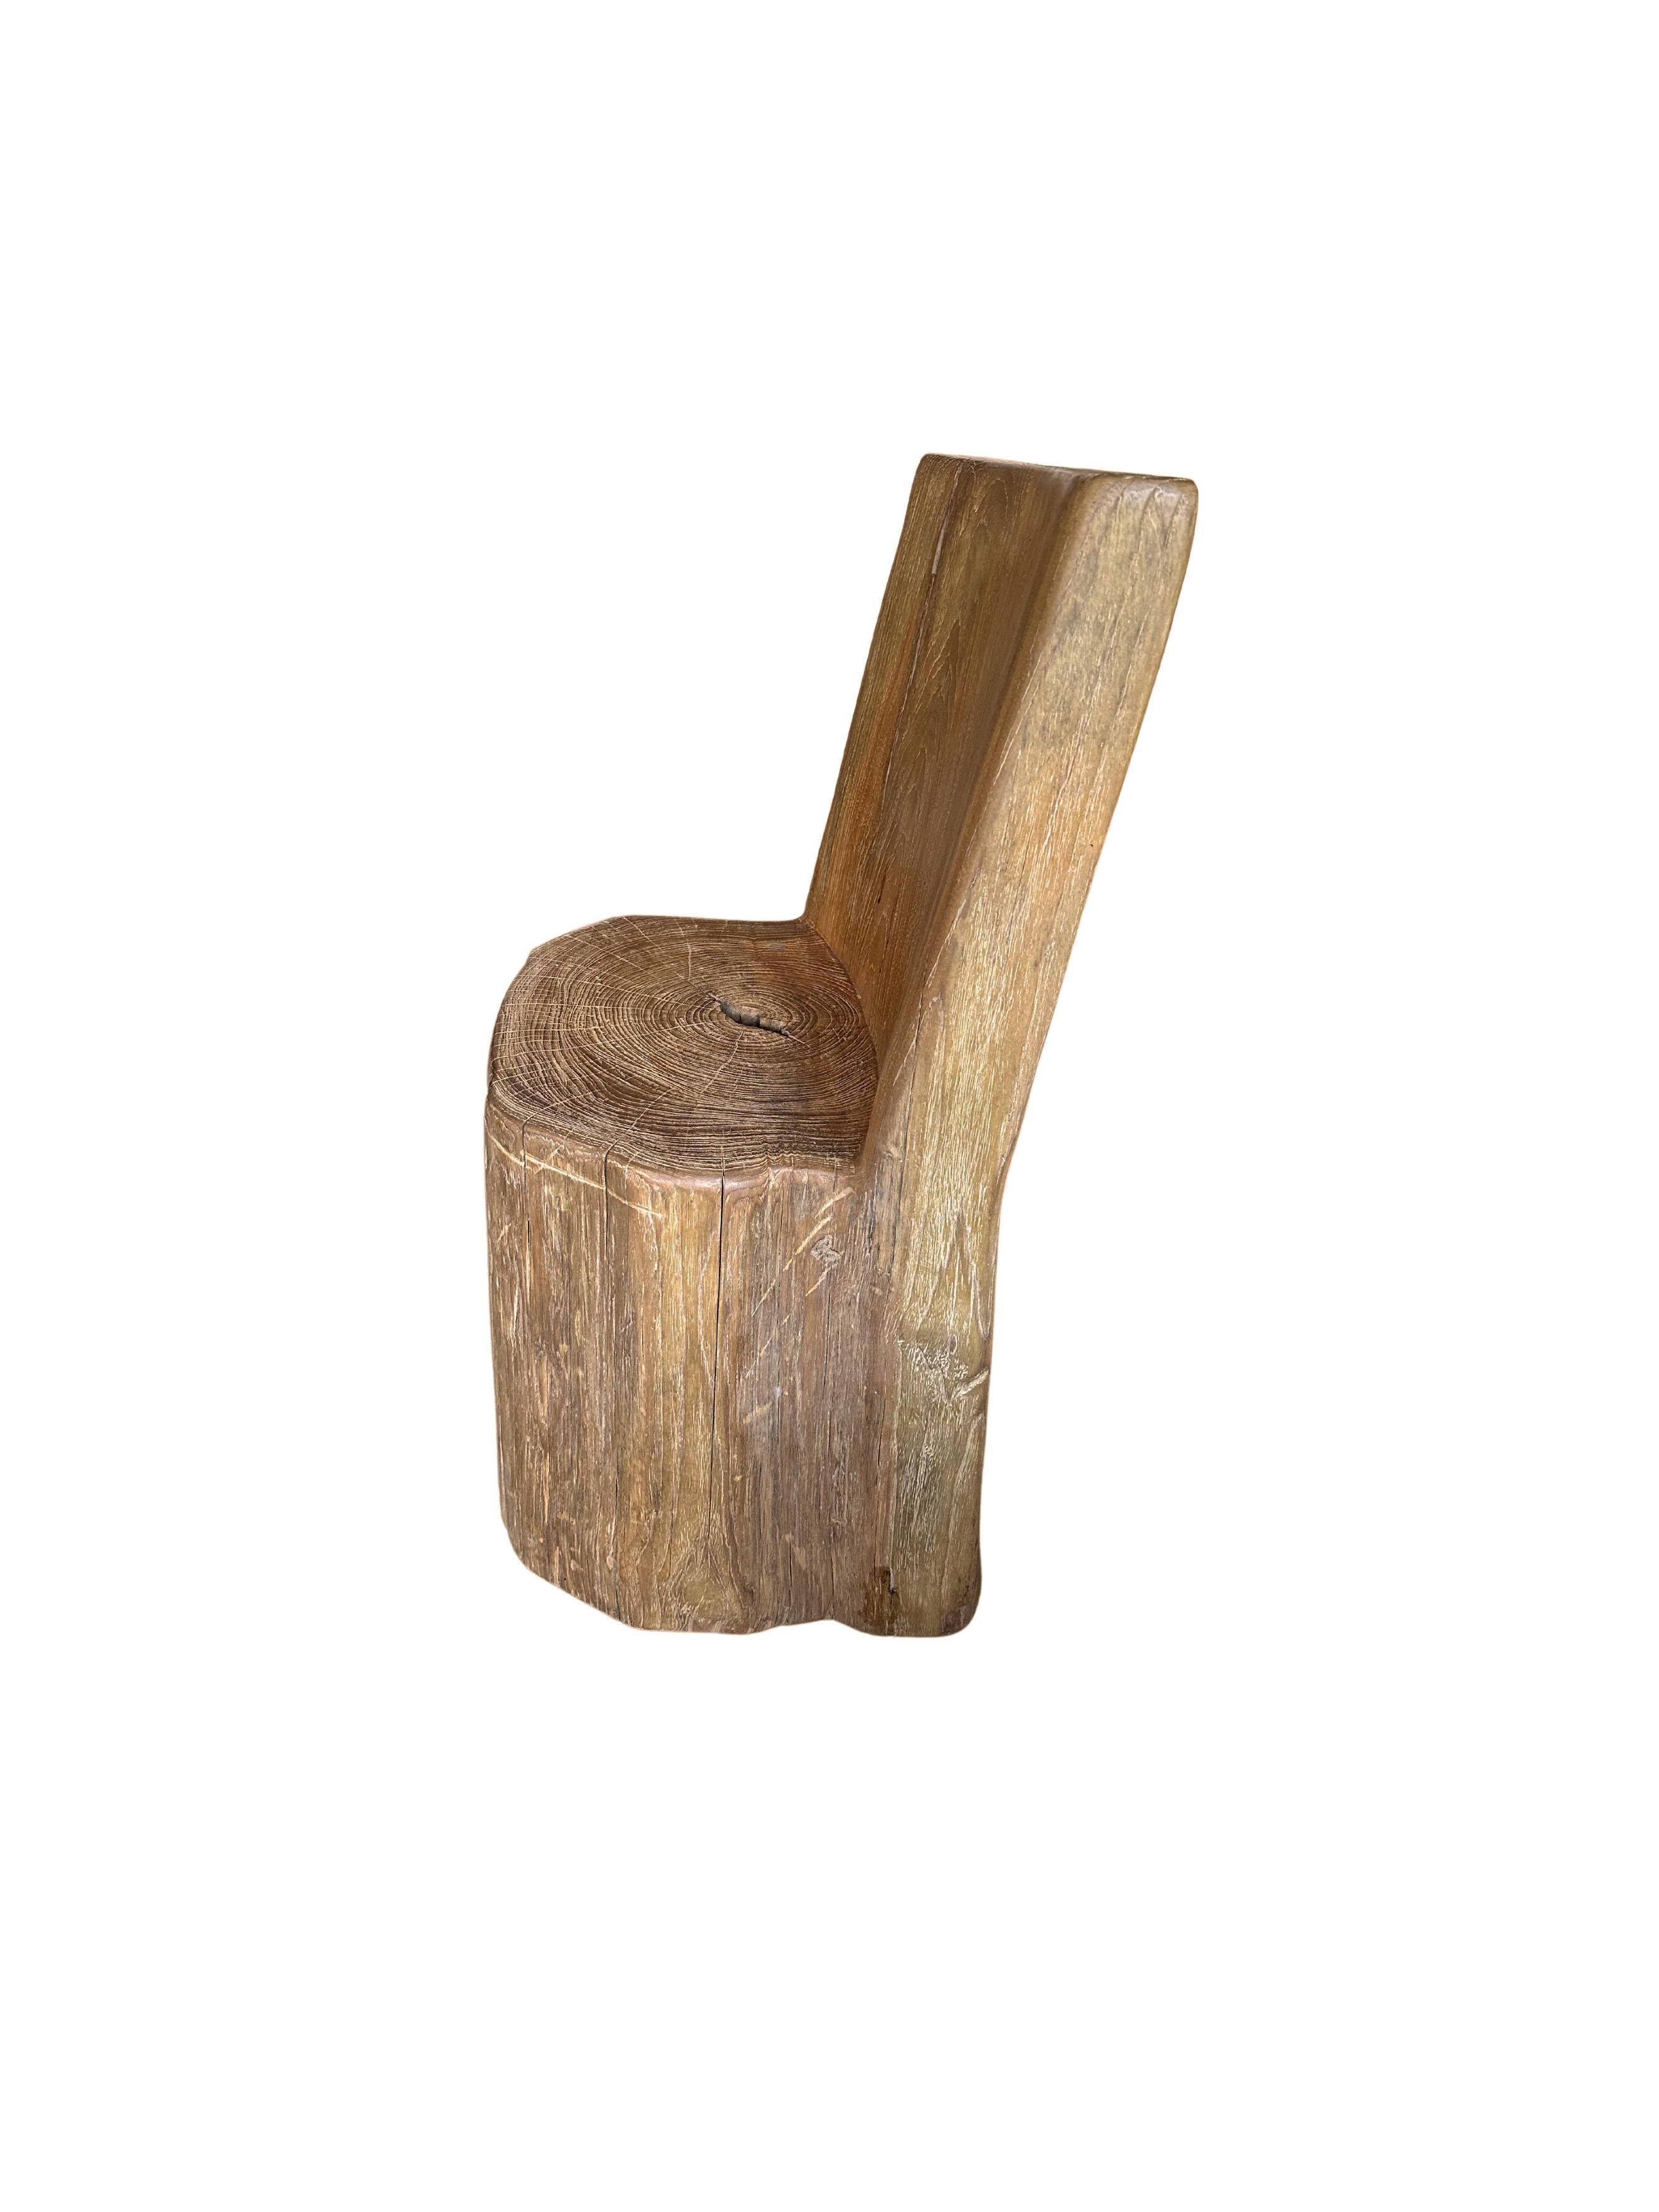 Contemporary Sculptural Soild Teak Wood Chair For Sale